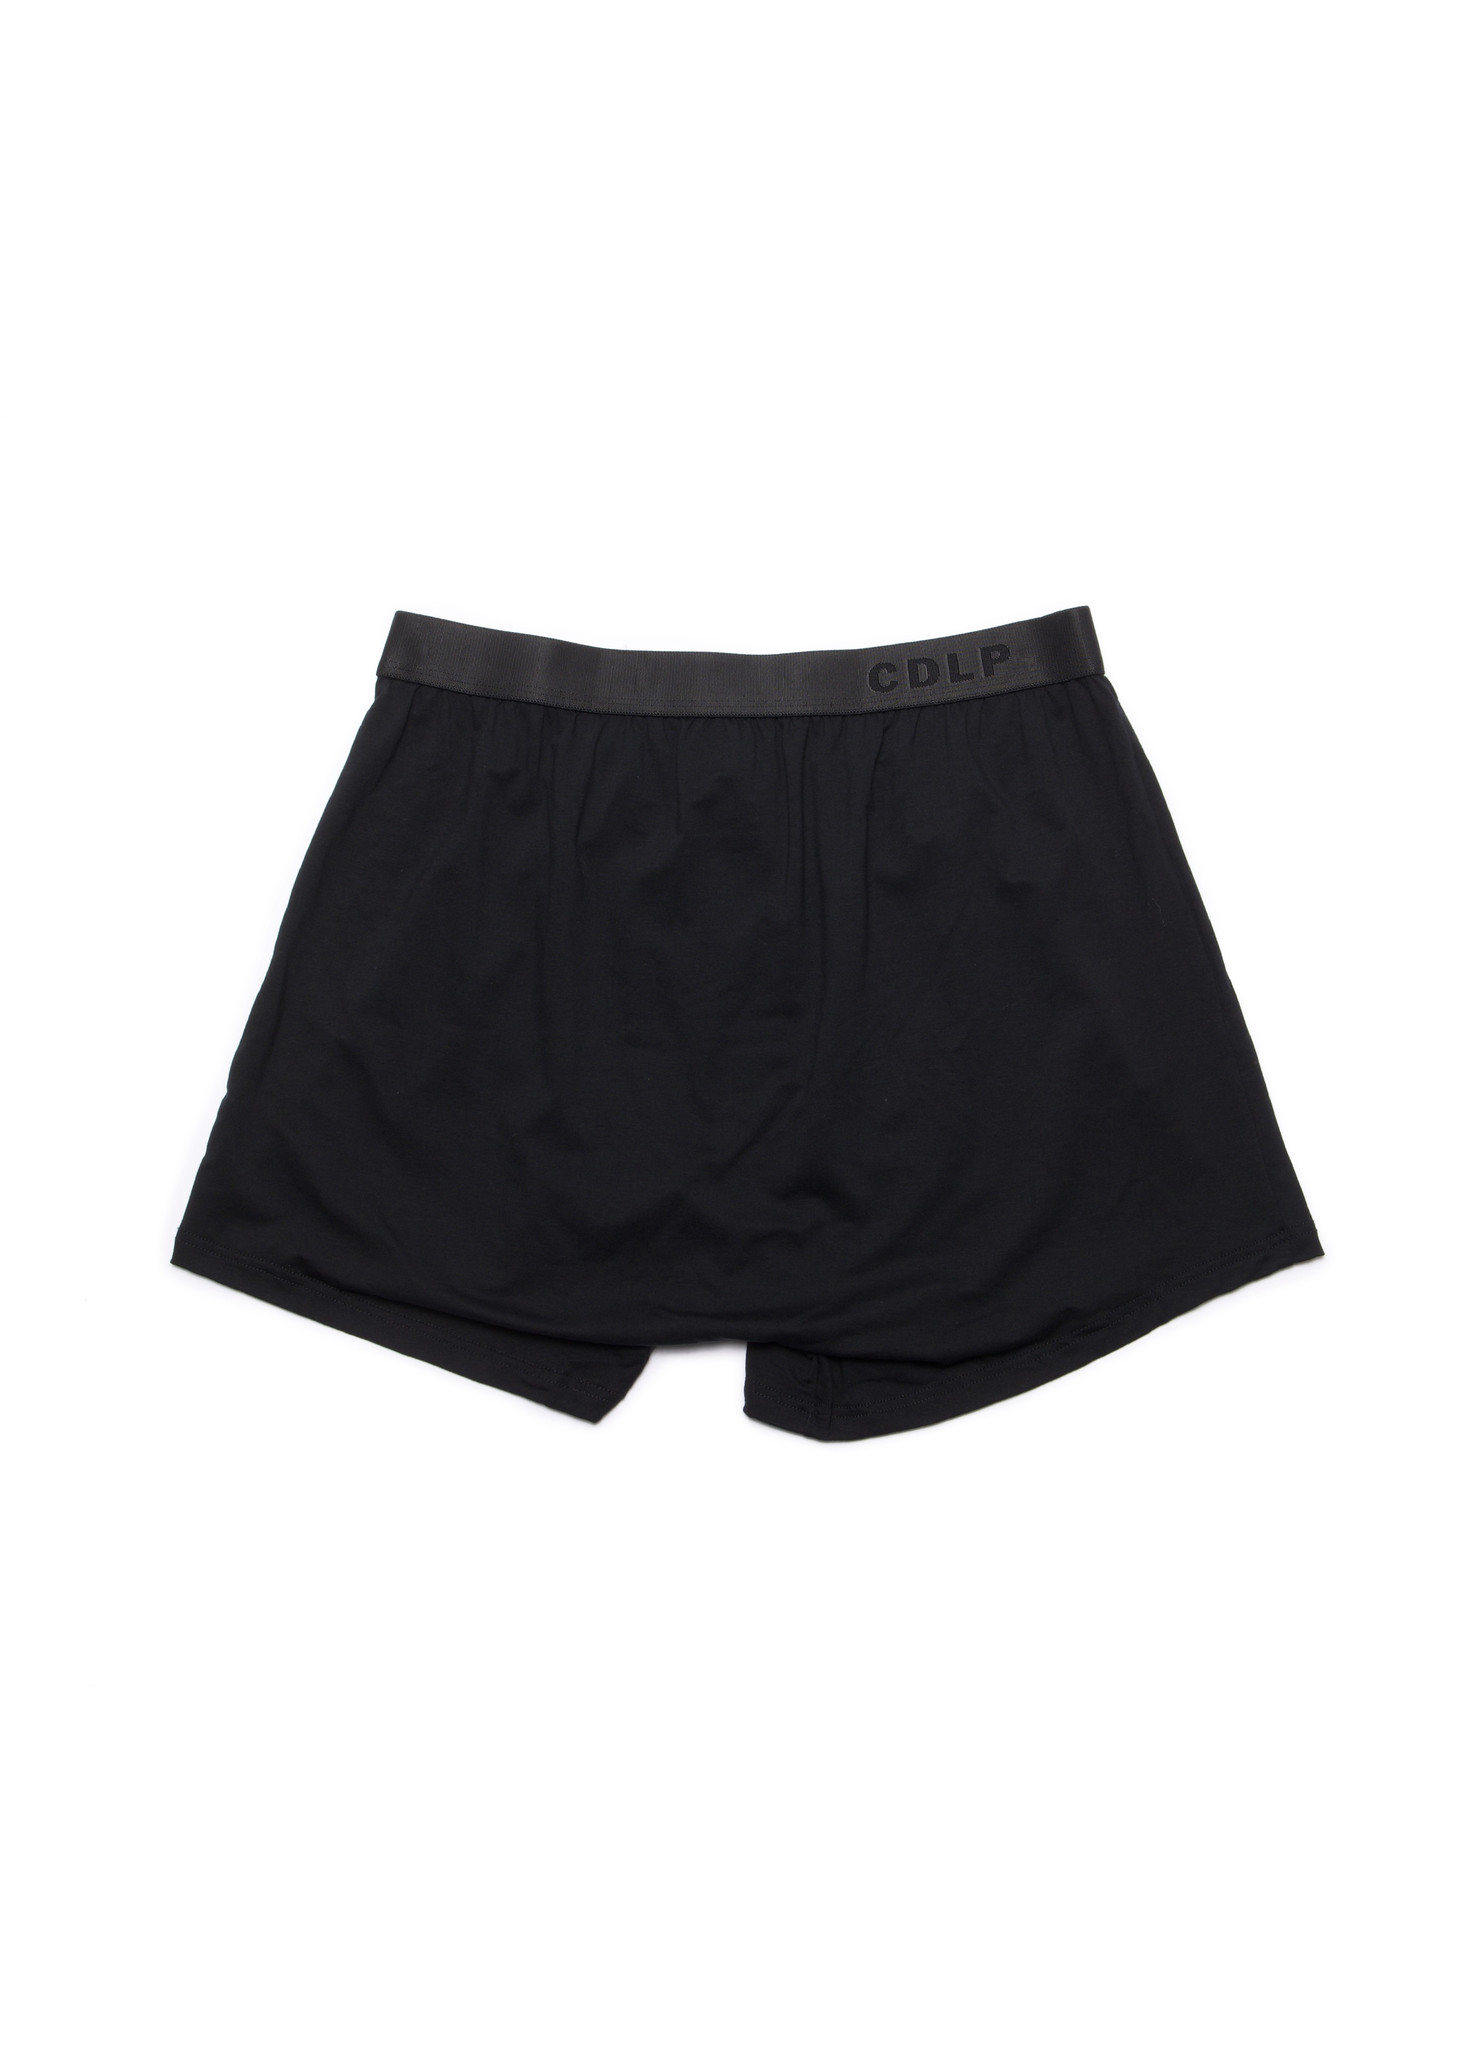 CDLP: Black Boxer Shorts - MICHEL BRISSON